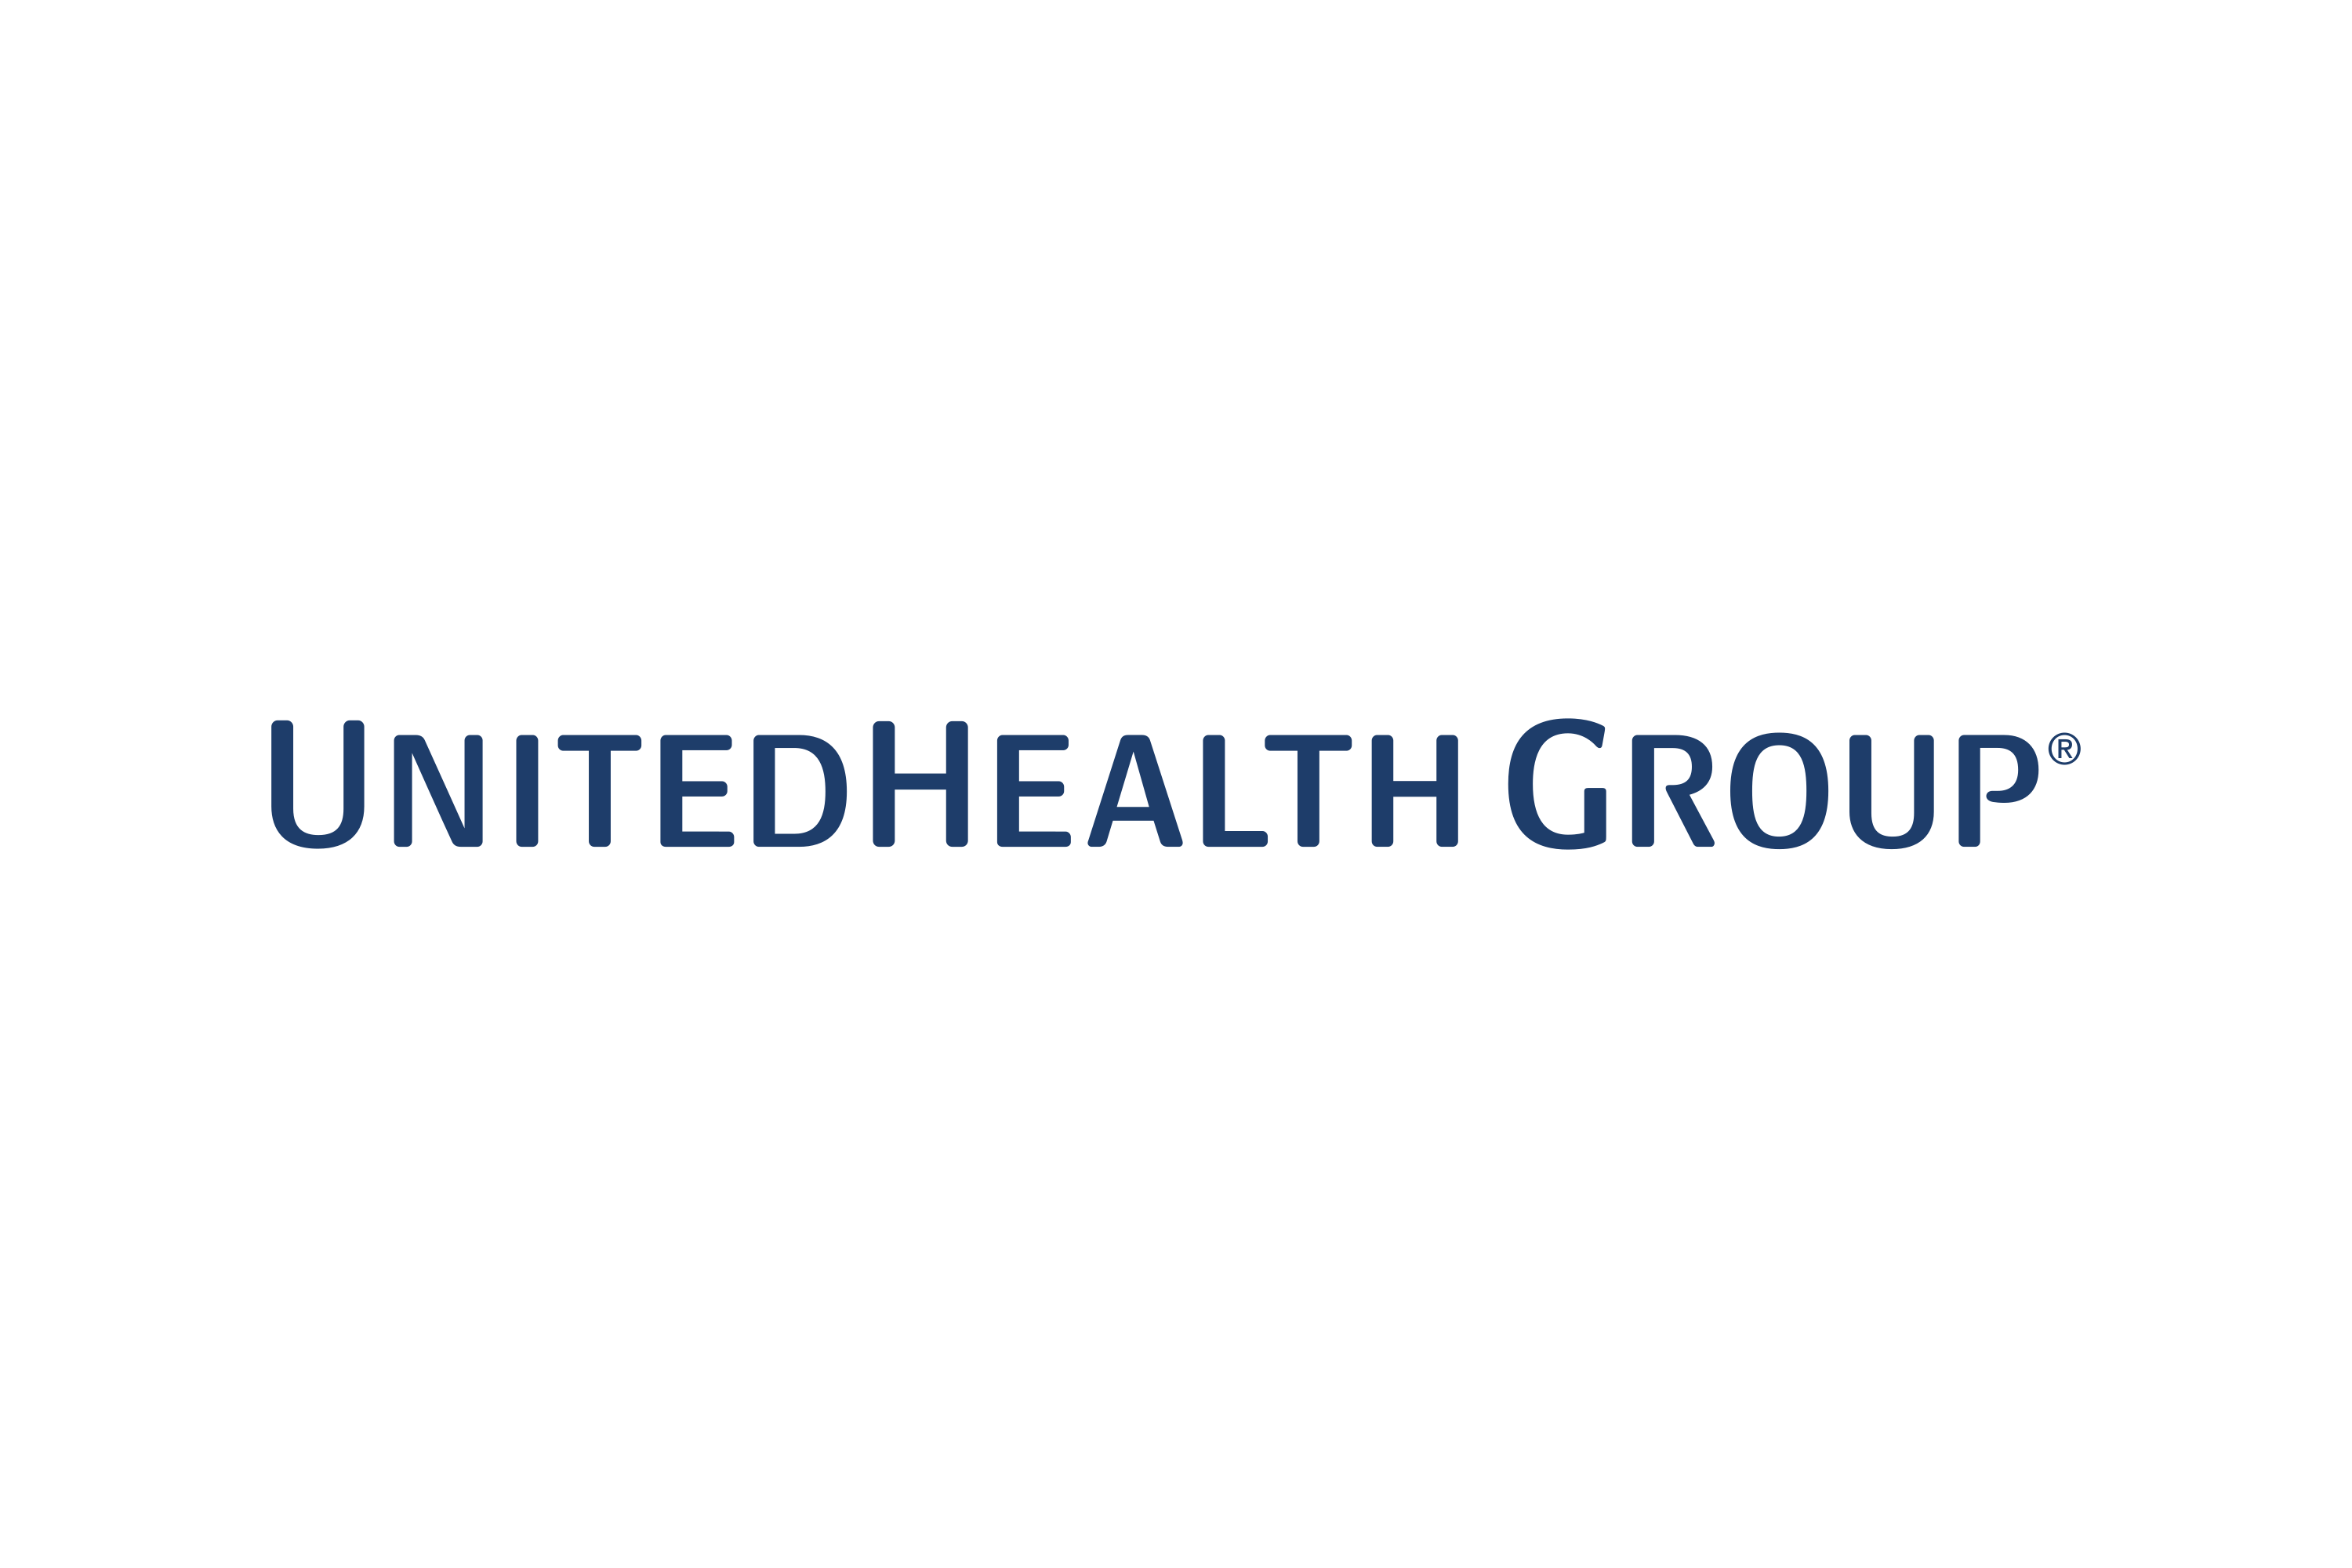 Download UnitedHealth Group Logo in SVG Vector or PNG File Format ...